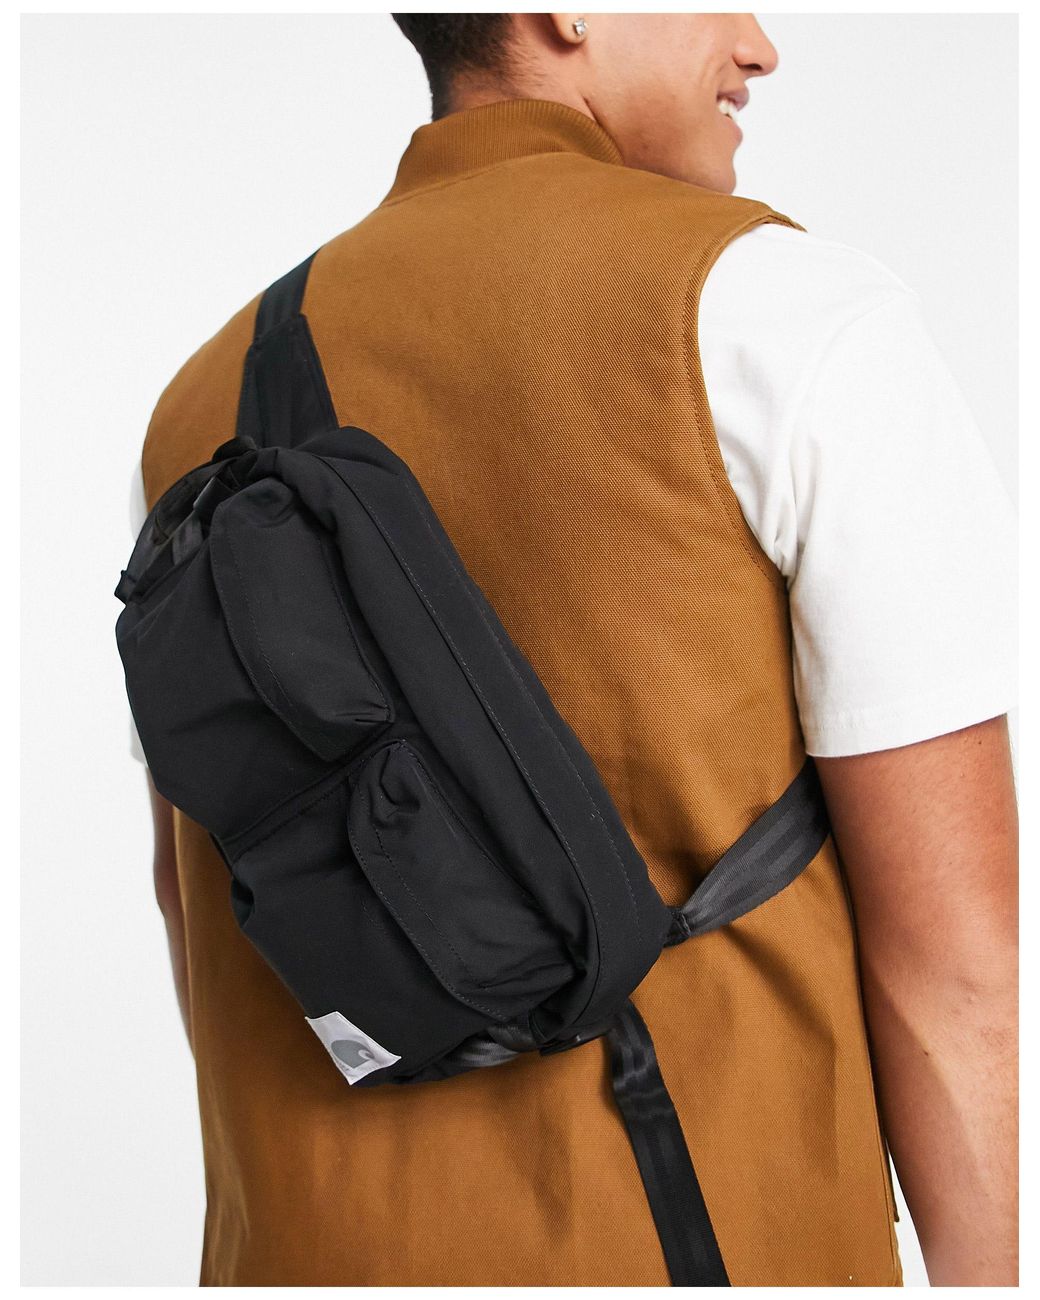 Carhartt Crossbody Zip Bag